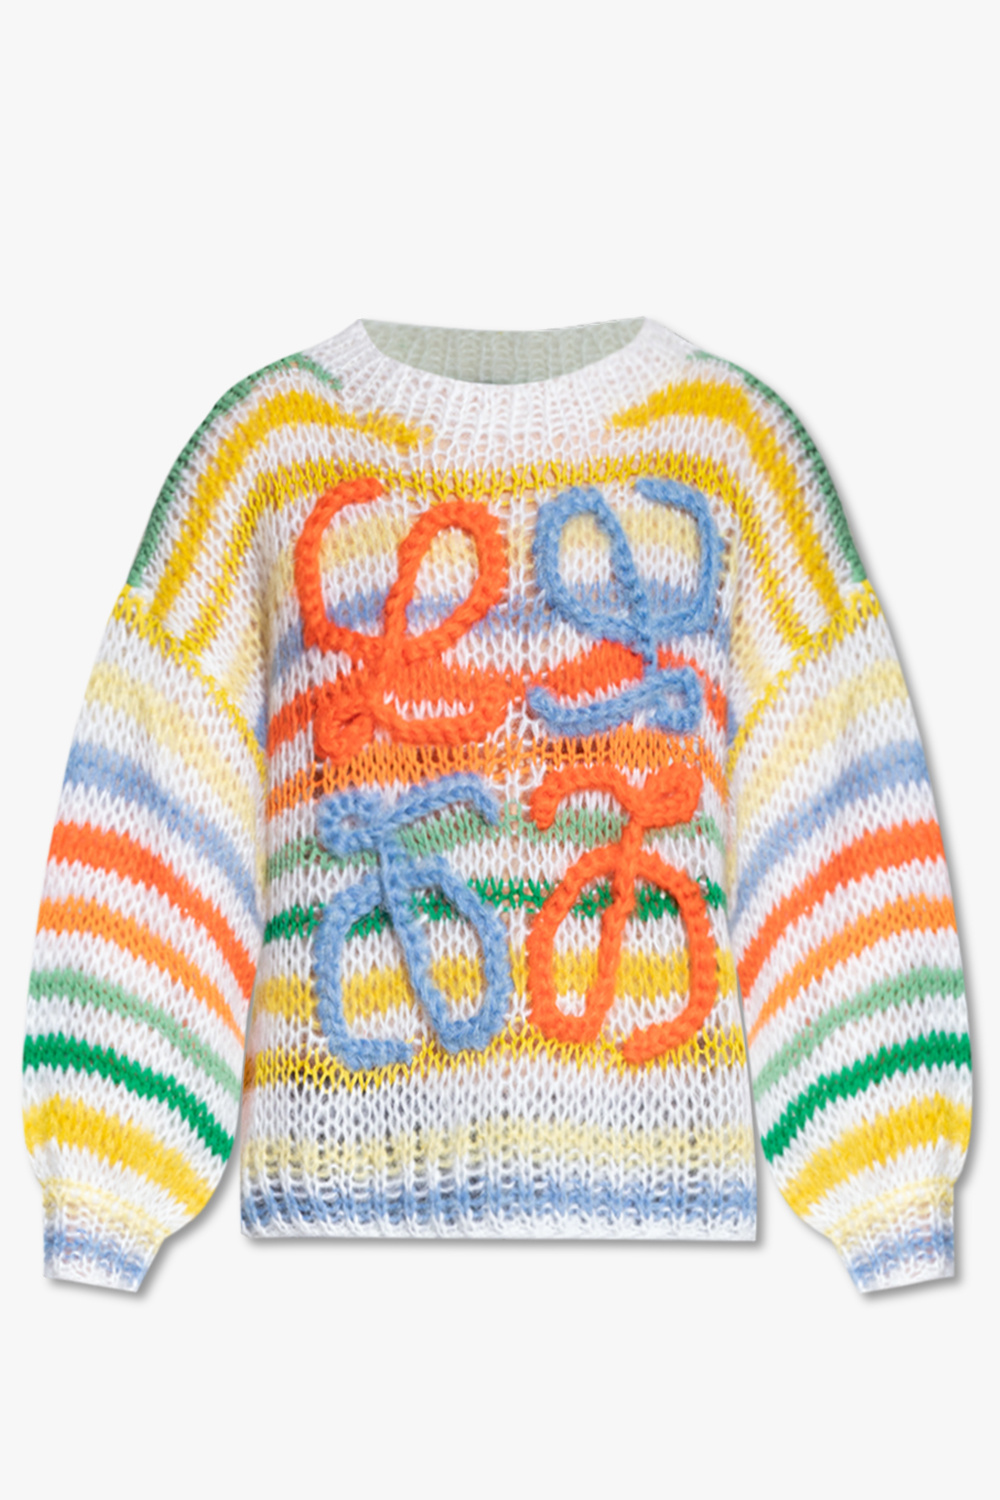 Loewe Sweater with anagram